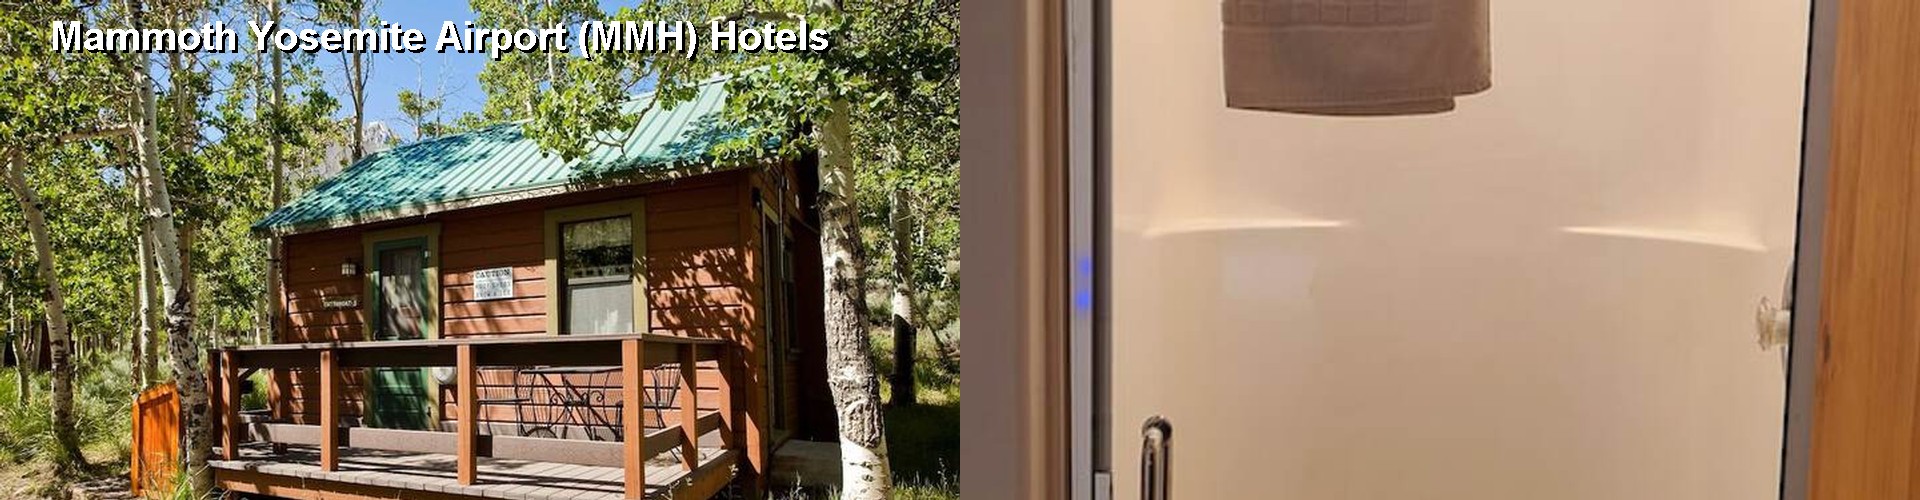 4 Best Hotels near Mammoth Yosemite Airport (MMH)